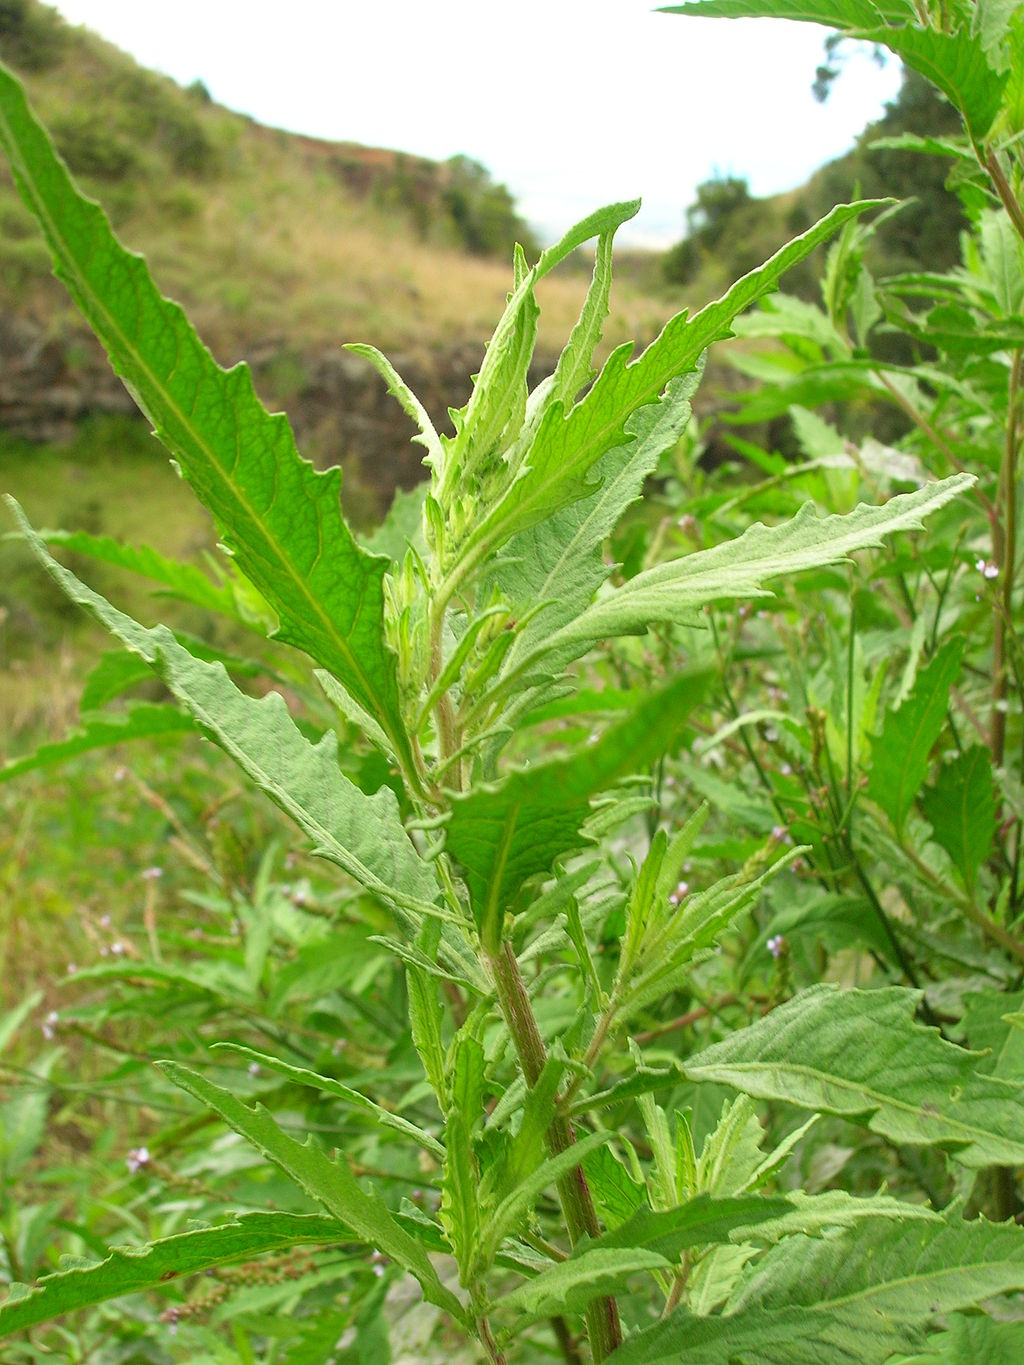 Abundant foliage along the stem